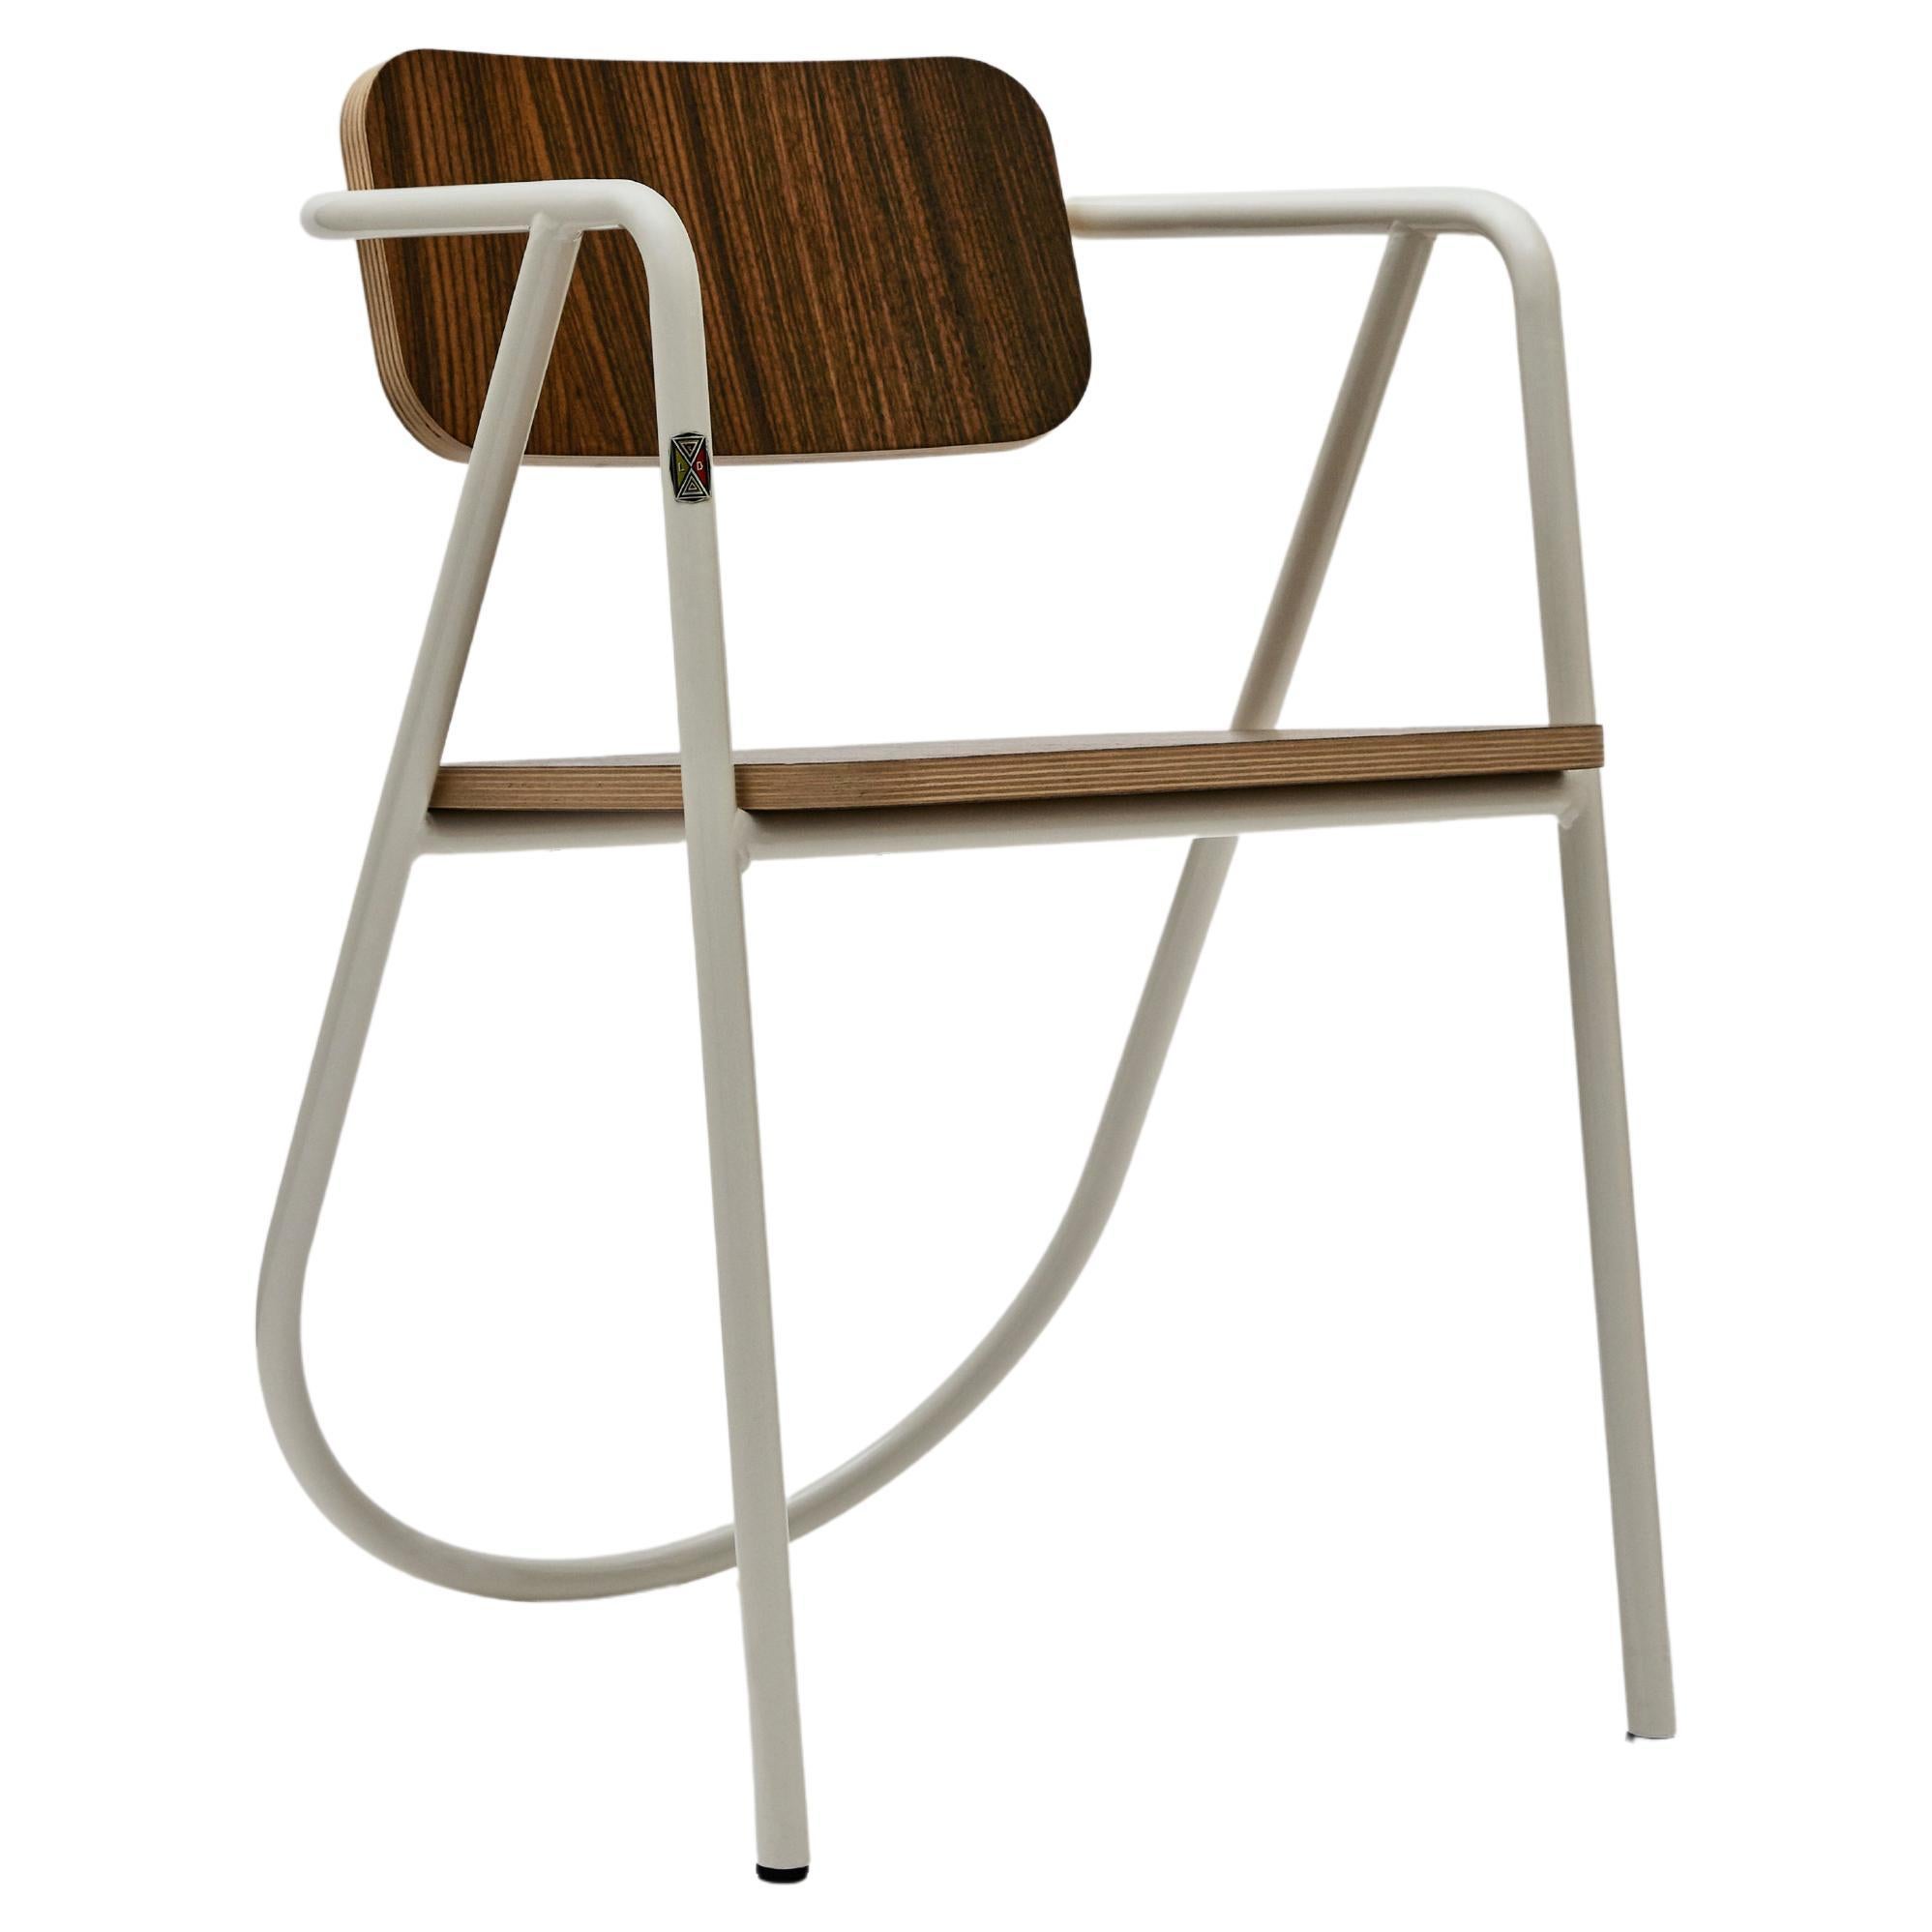 La Misciù Chair, White and Dark Wood For Sale